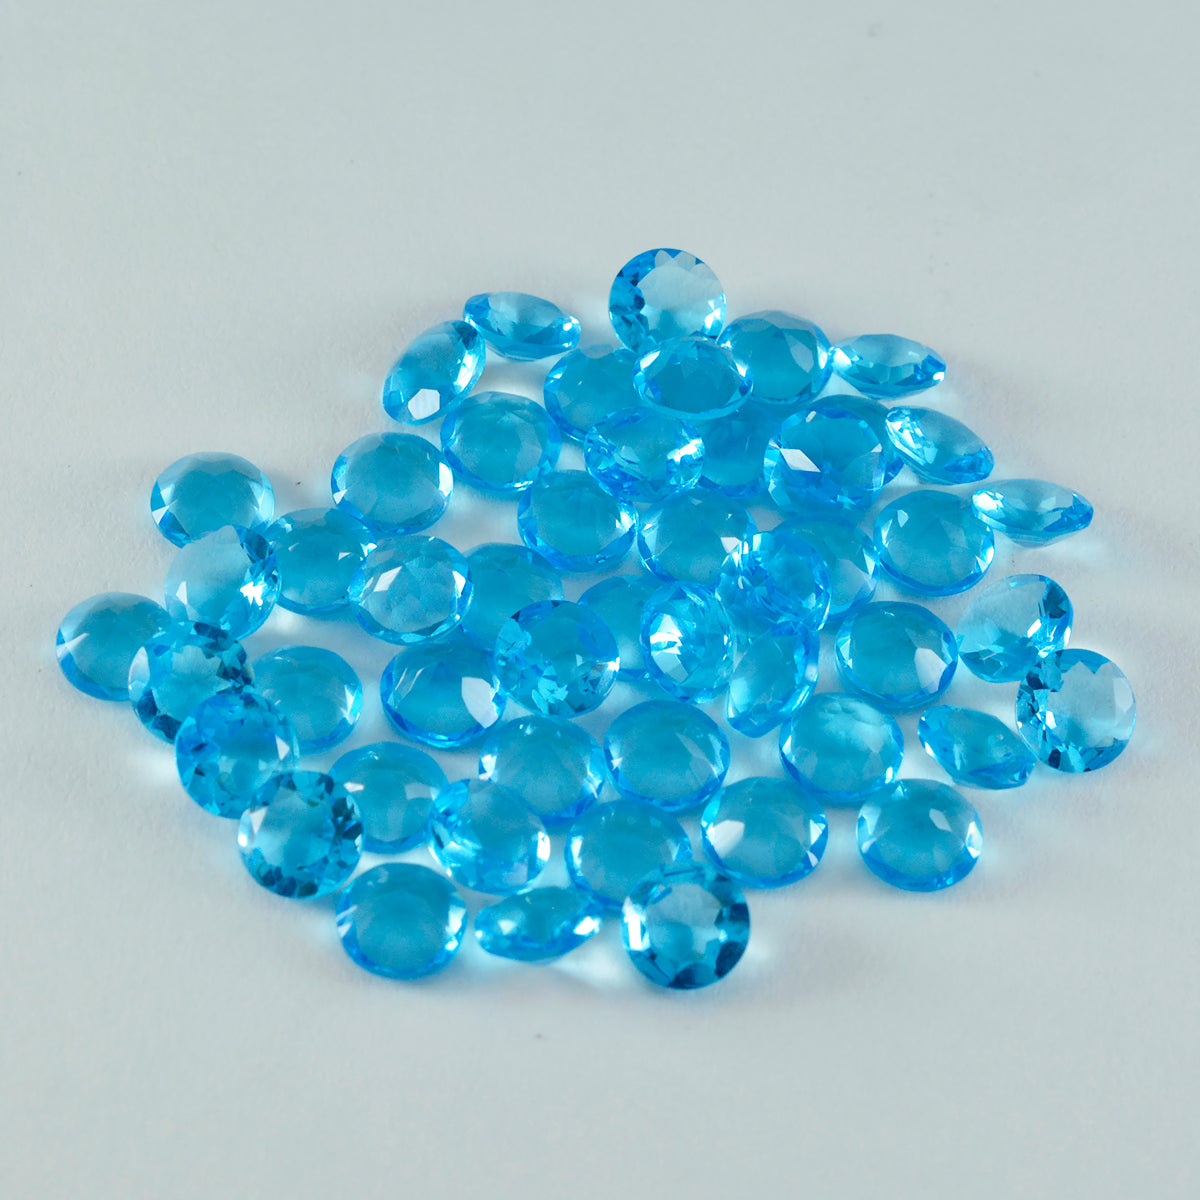 Riyogems 1PC Blue Topaz CZ Faceted 4x4 mm Round Shape superb Quality Gemstone